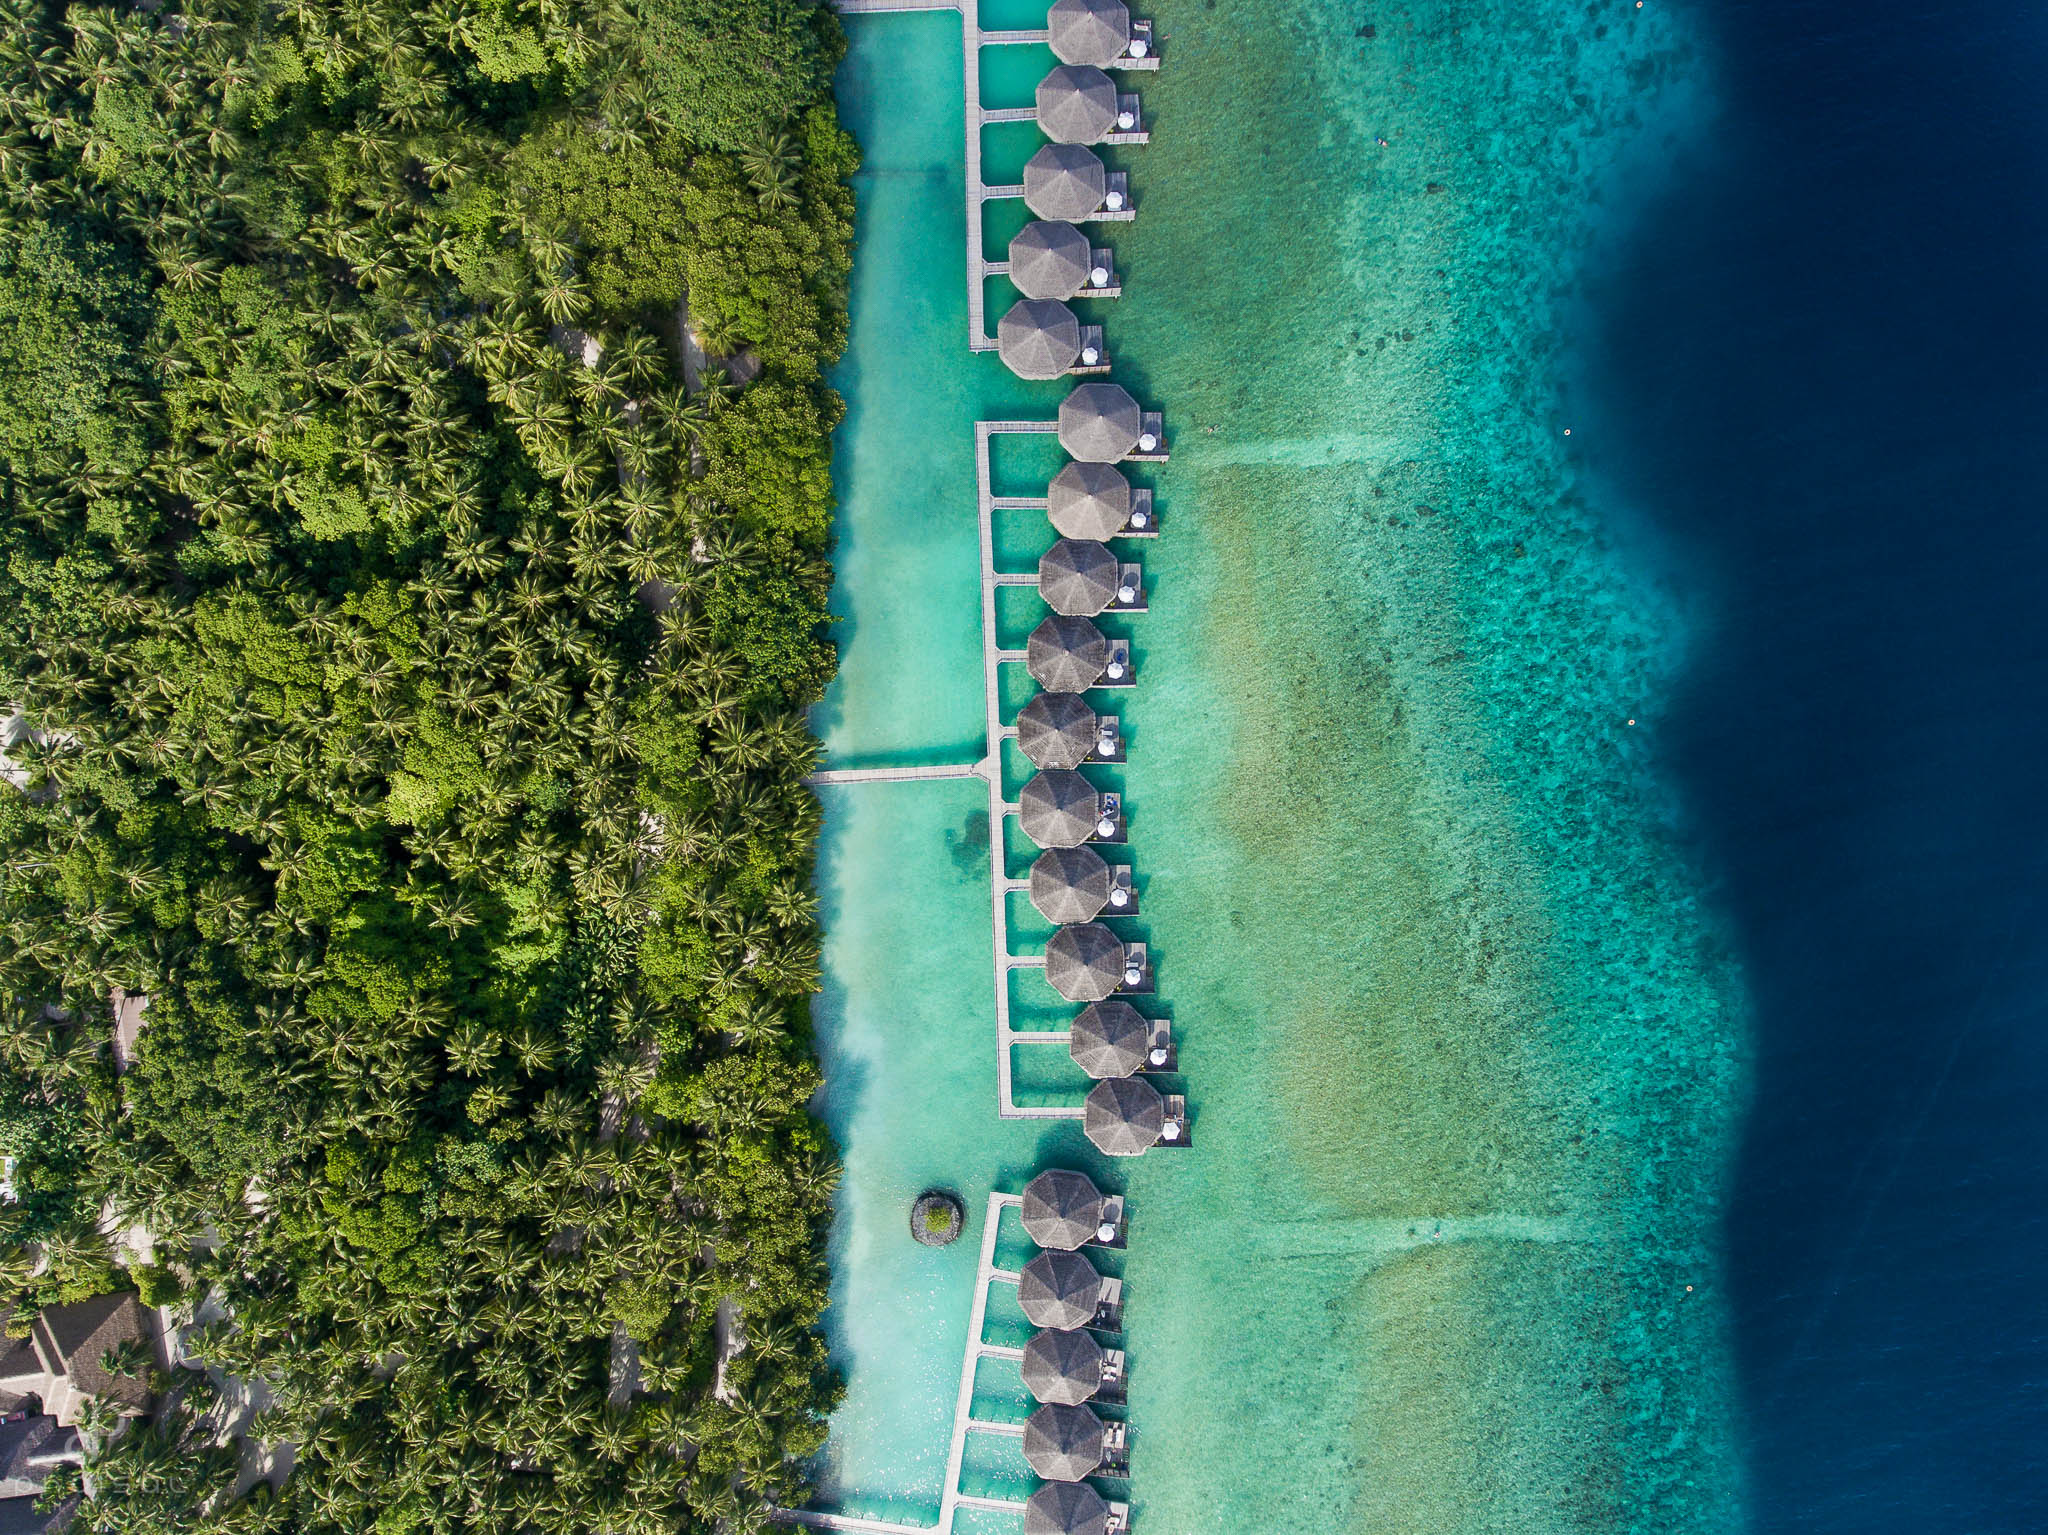 kuramathi maldives by phaisalphotos